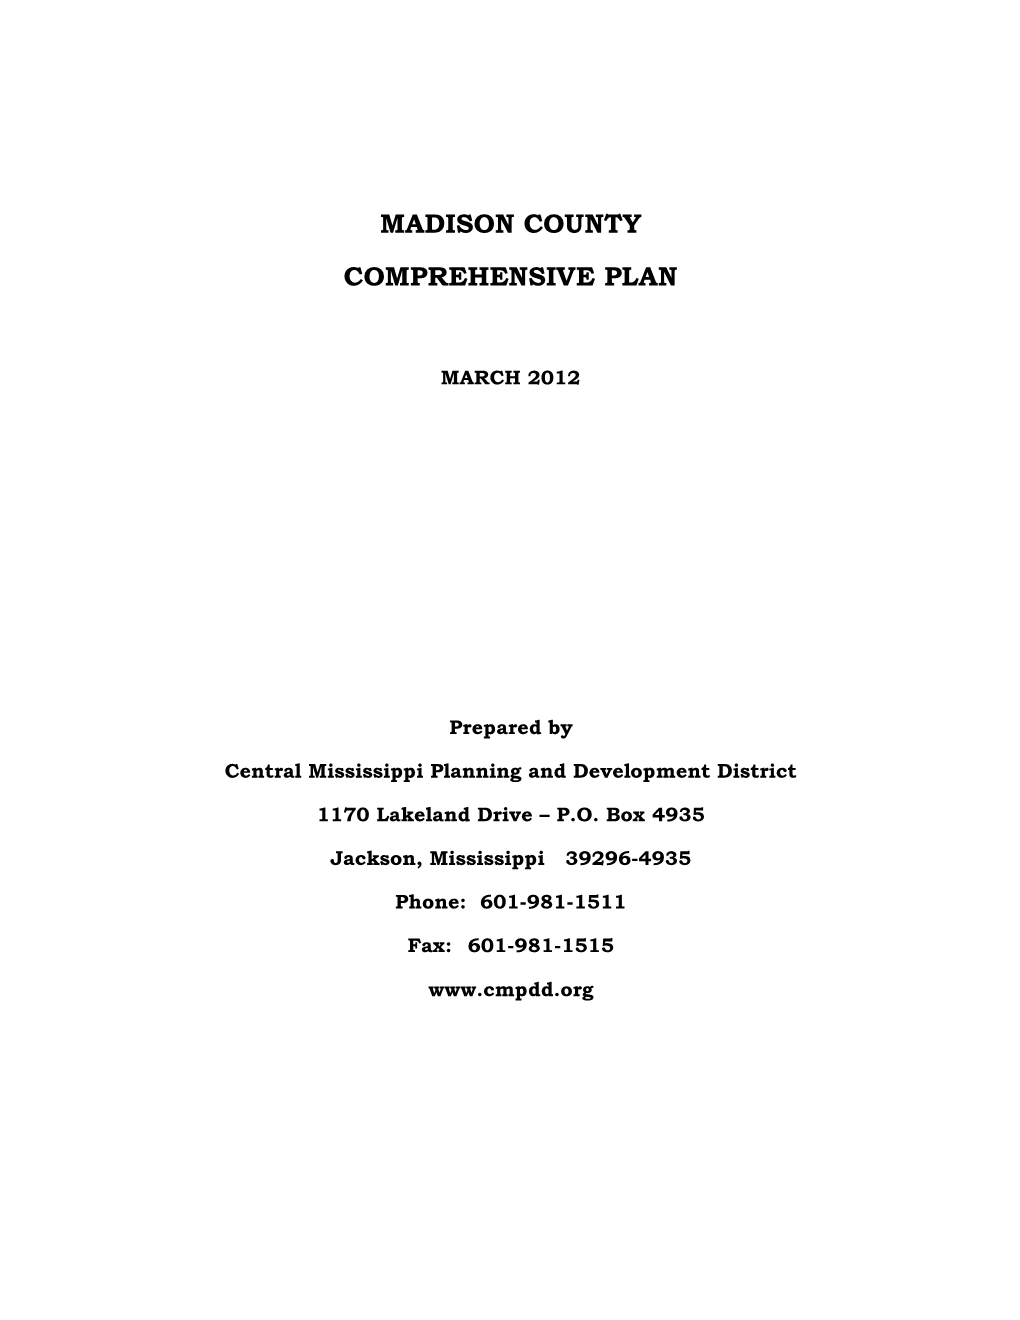 Madison County Comprehensive Plan